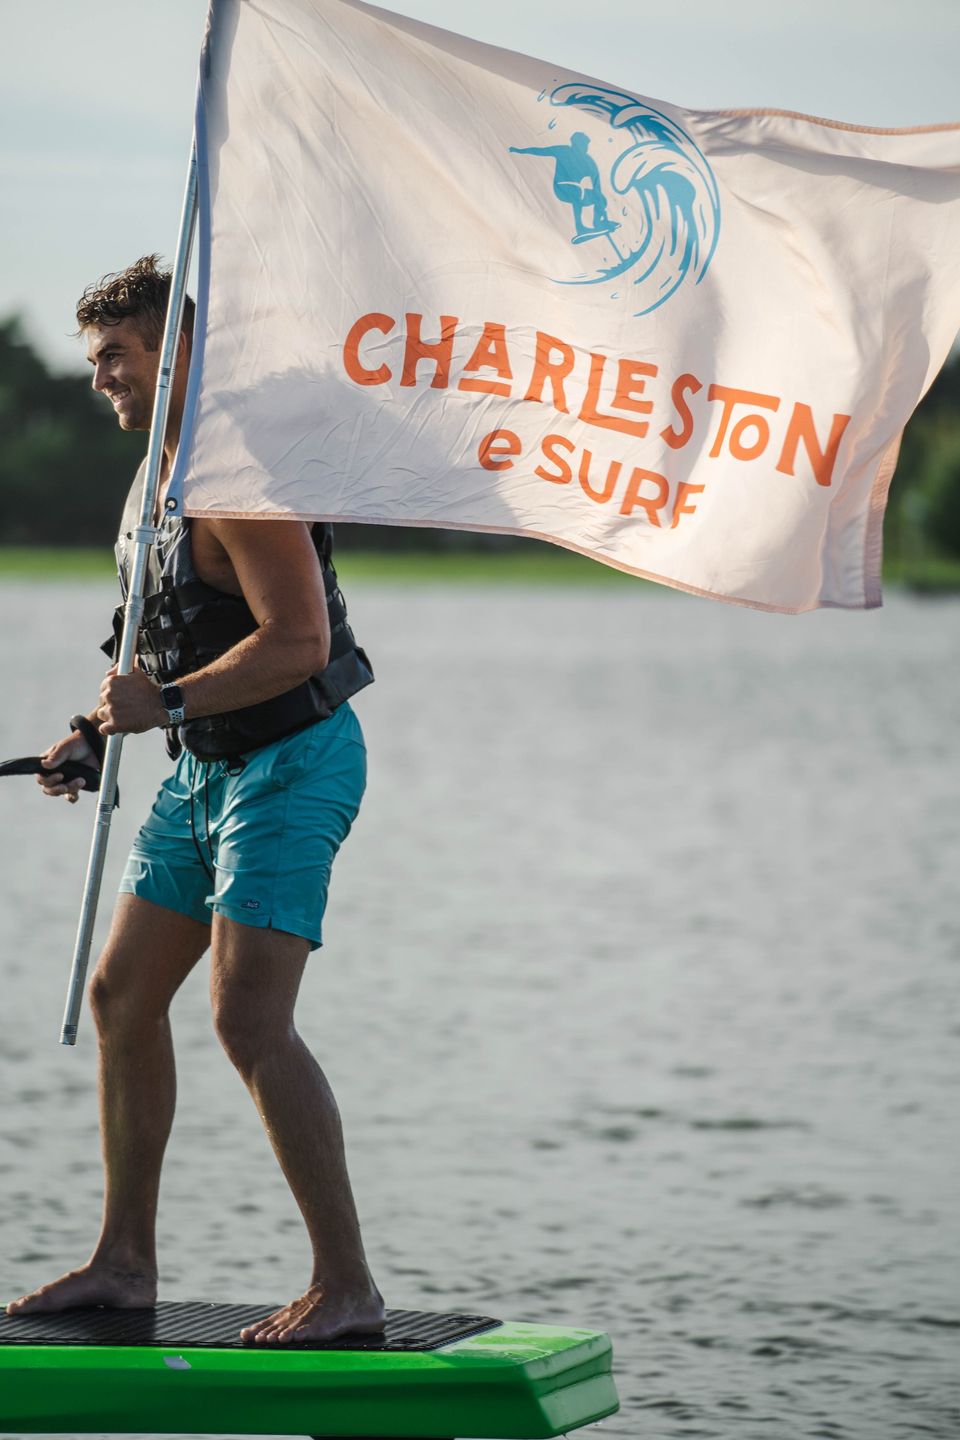 Charleston esurf flag